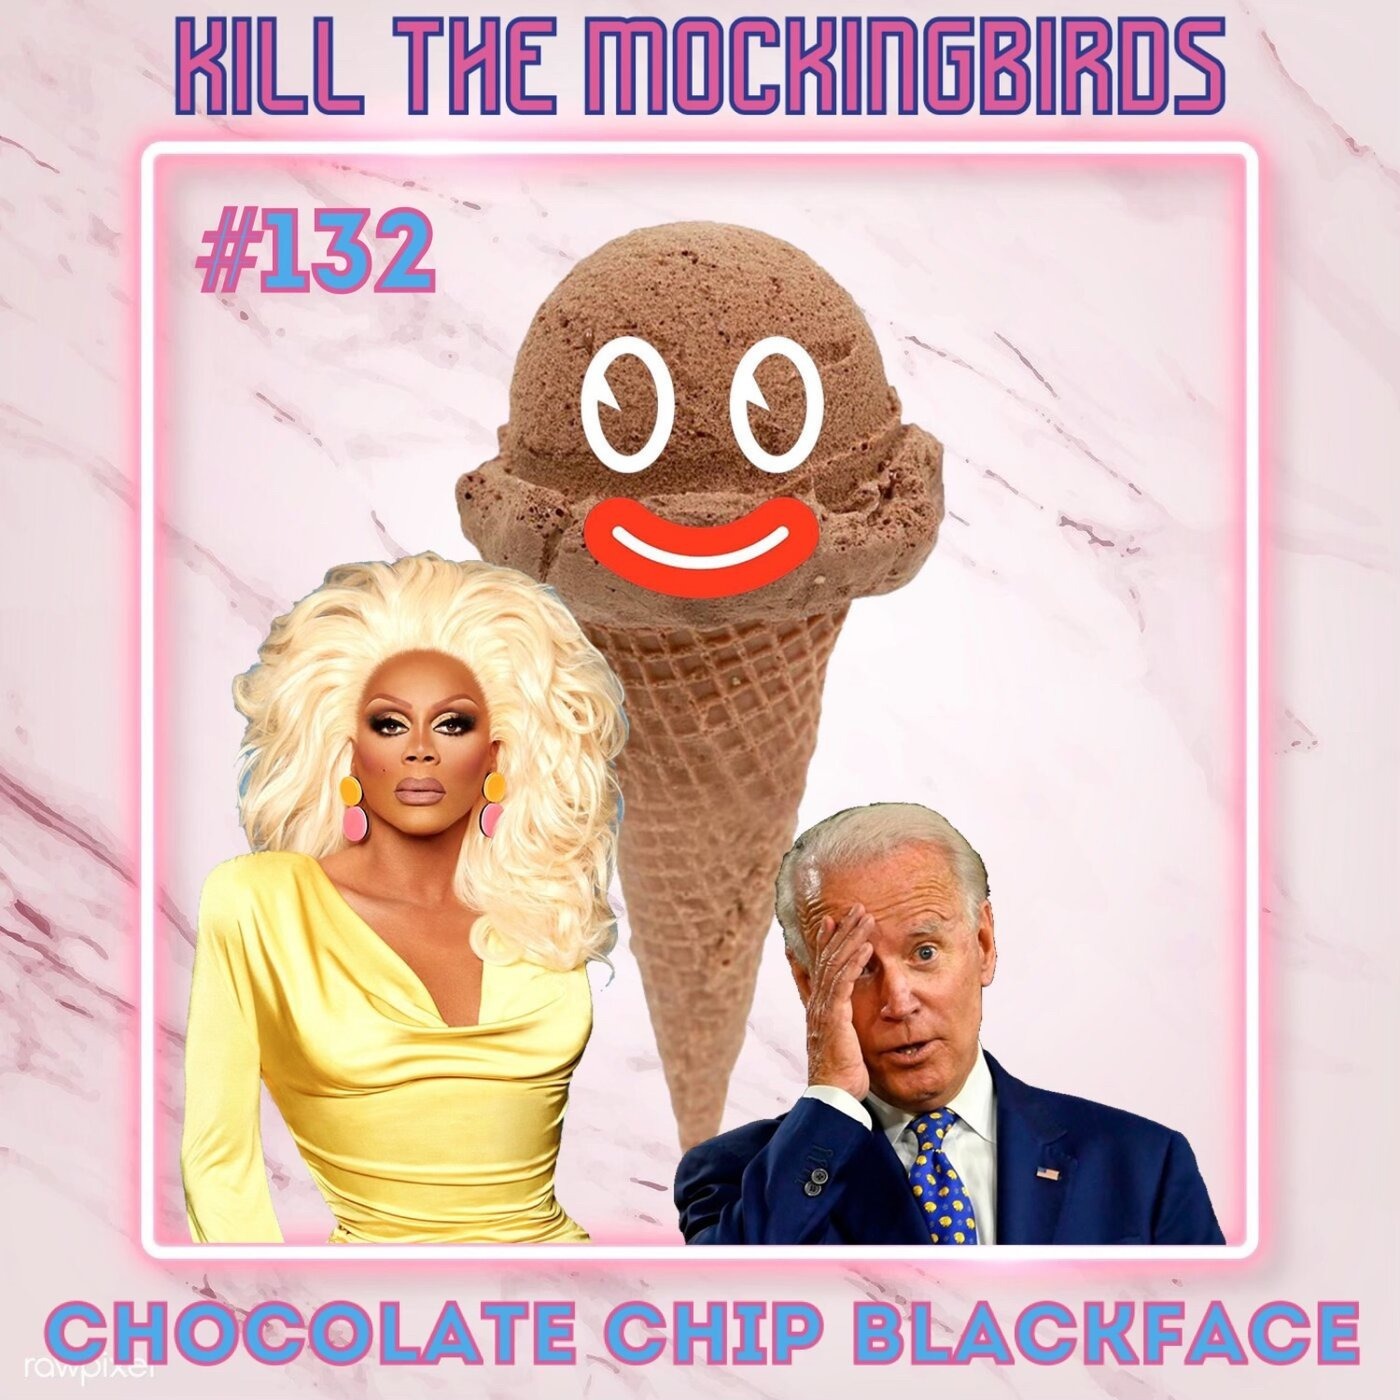 #132 “CHOCOLATE CHIP BLACKFACE”